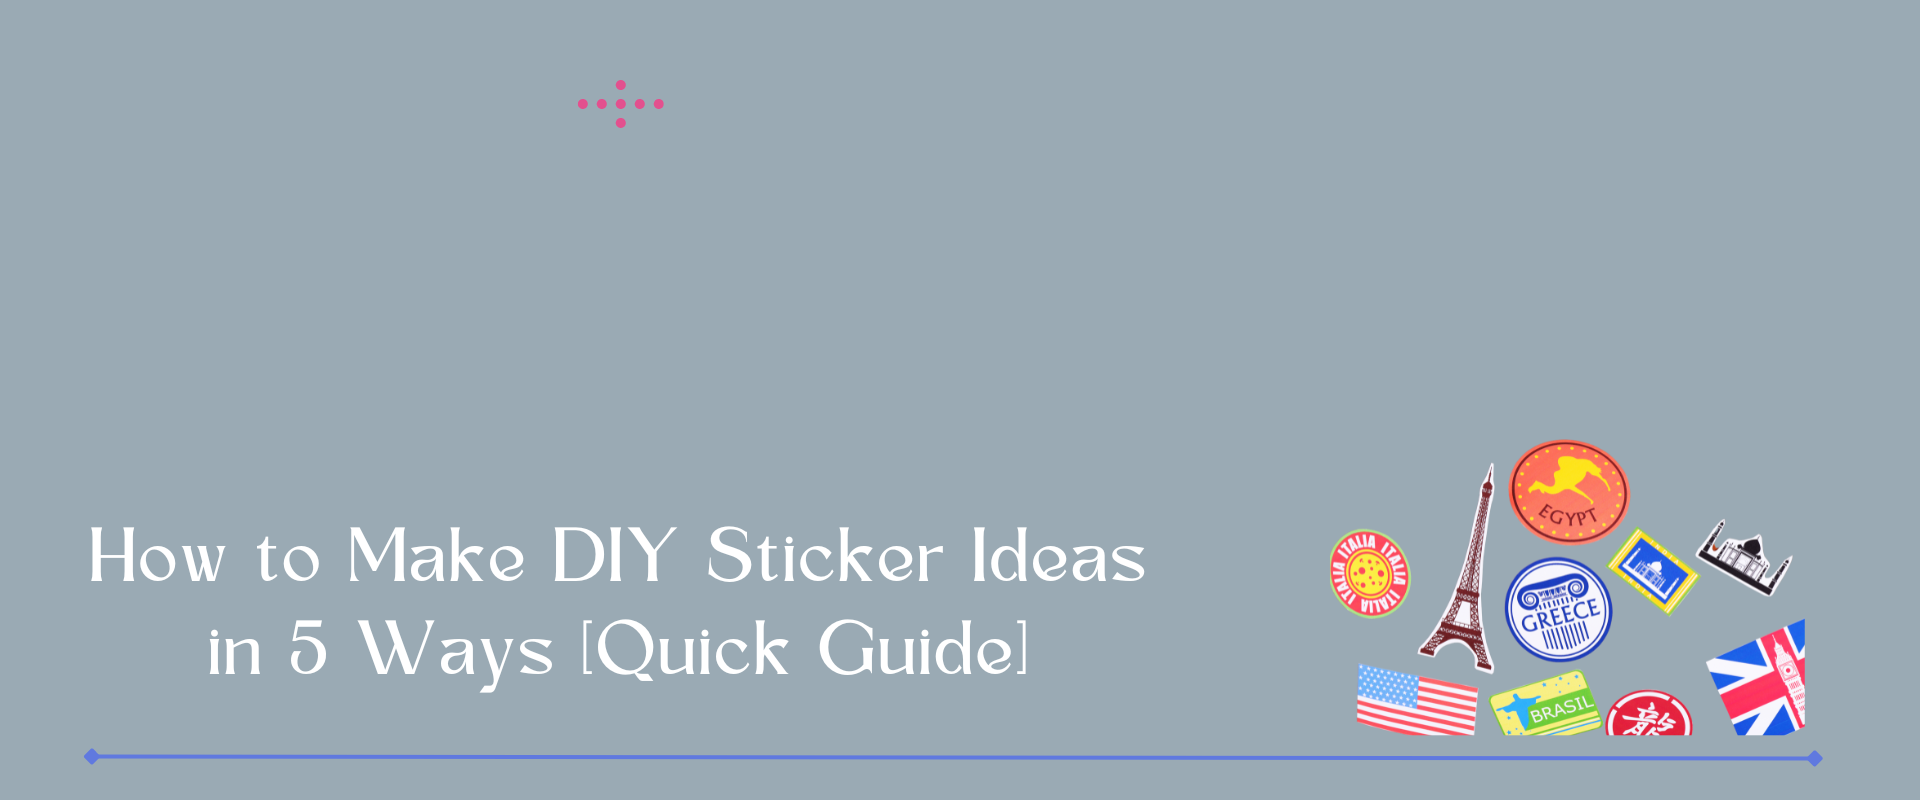 diy sticker ideas